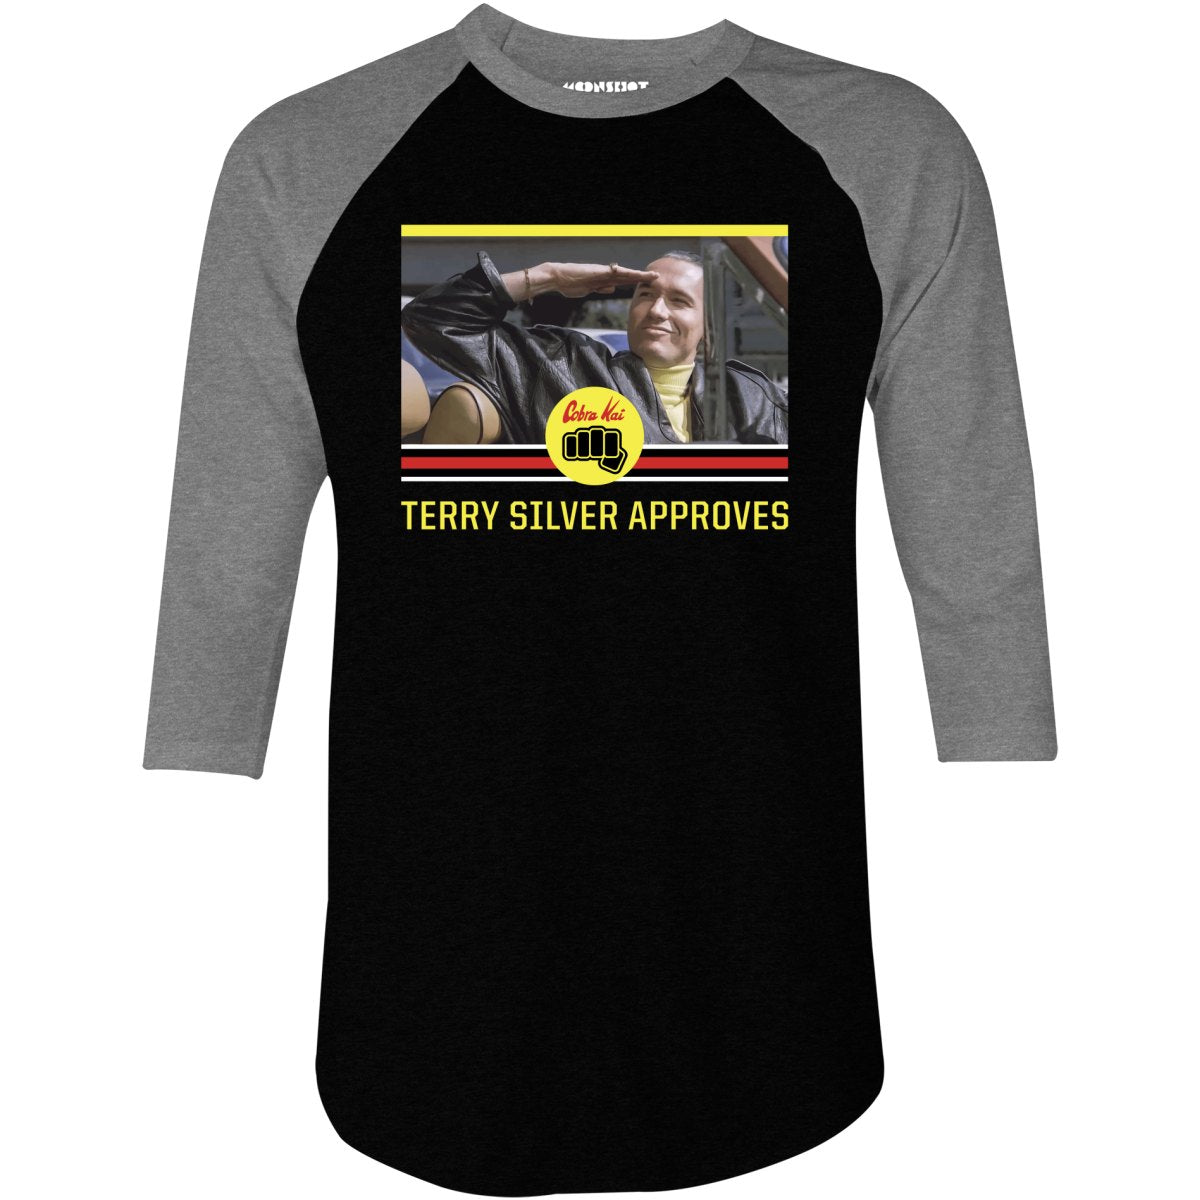 Terry Silver Approves - 3/4 Sleeve Raglan T-Shirt